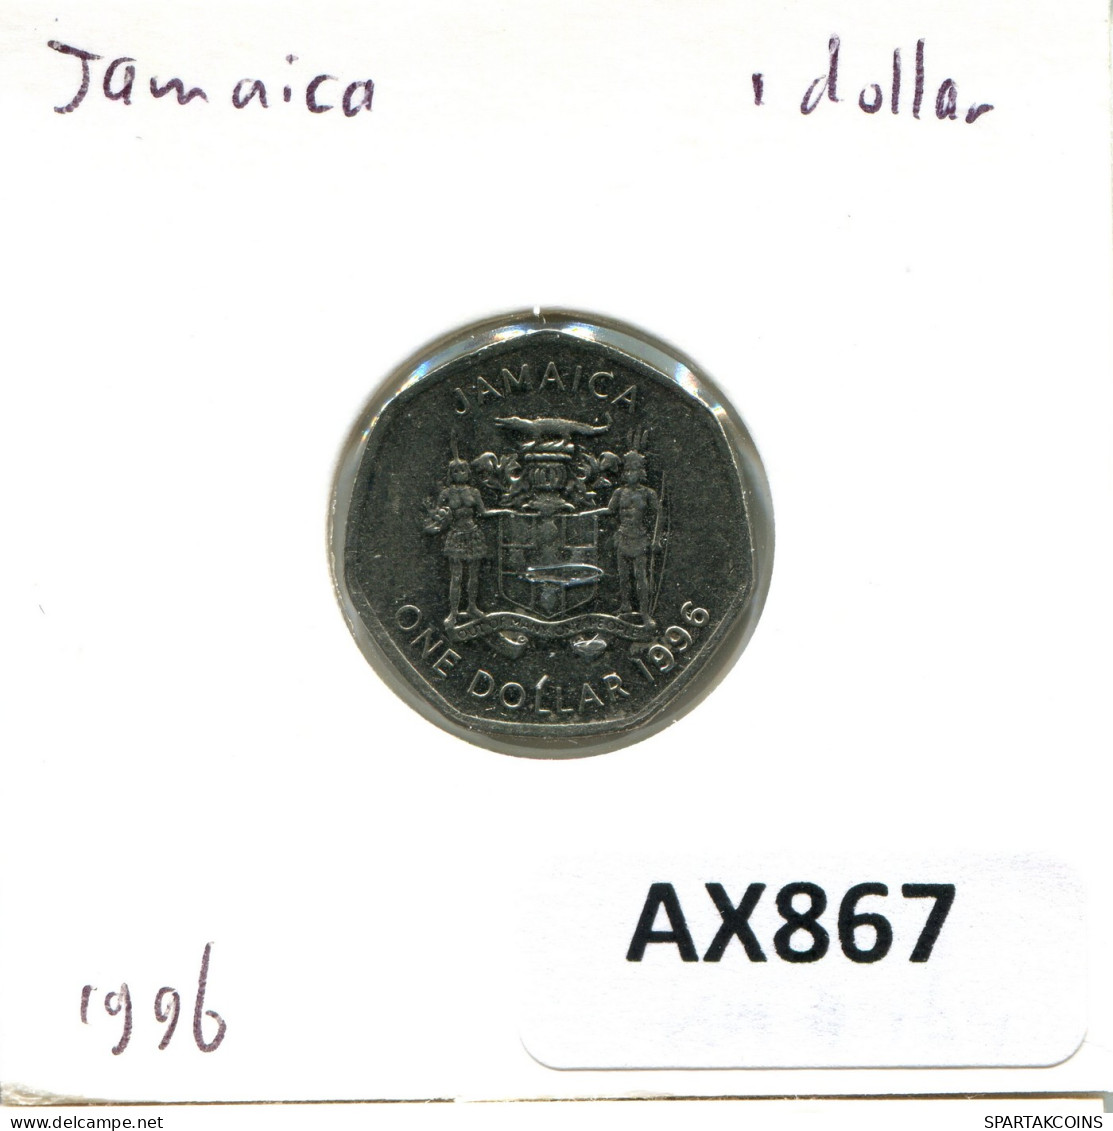 1 DOLLAR 1996 JAMAICA Coin #AX867.U - Jamaica